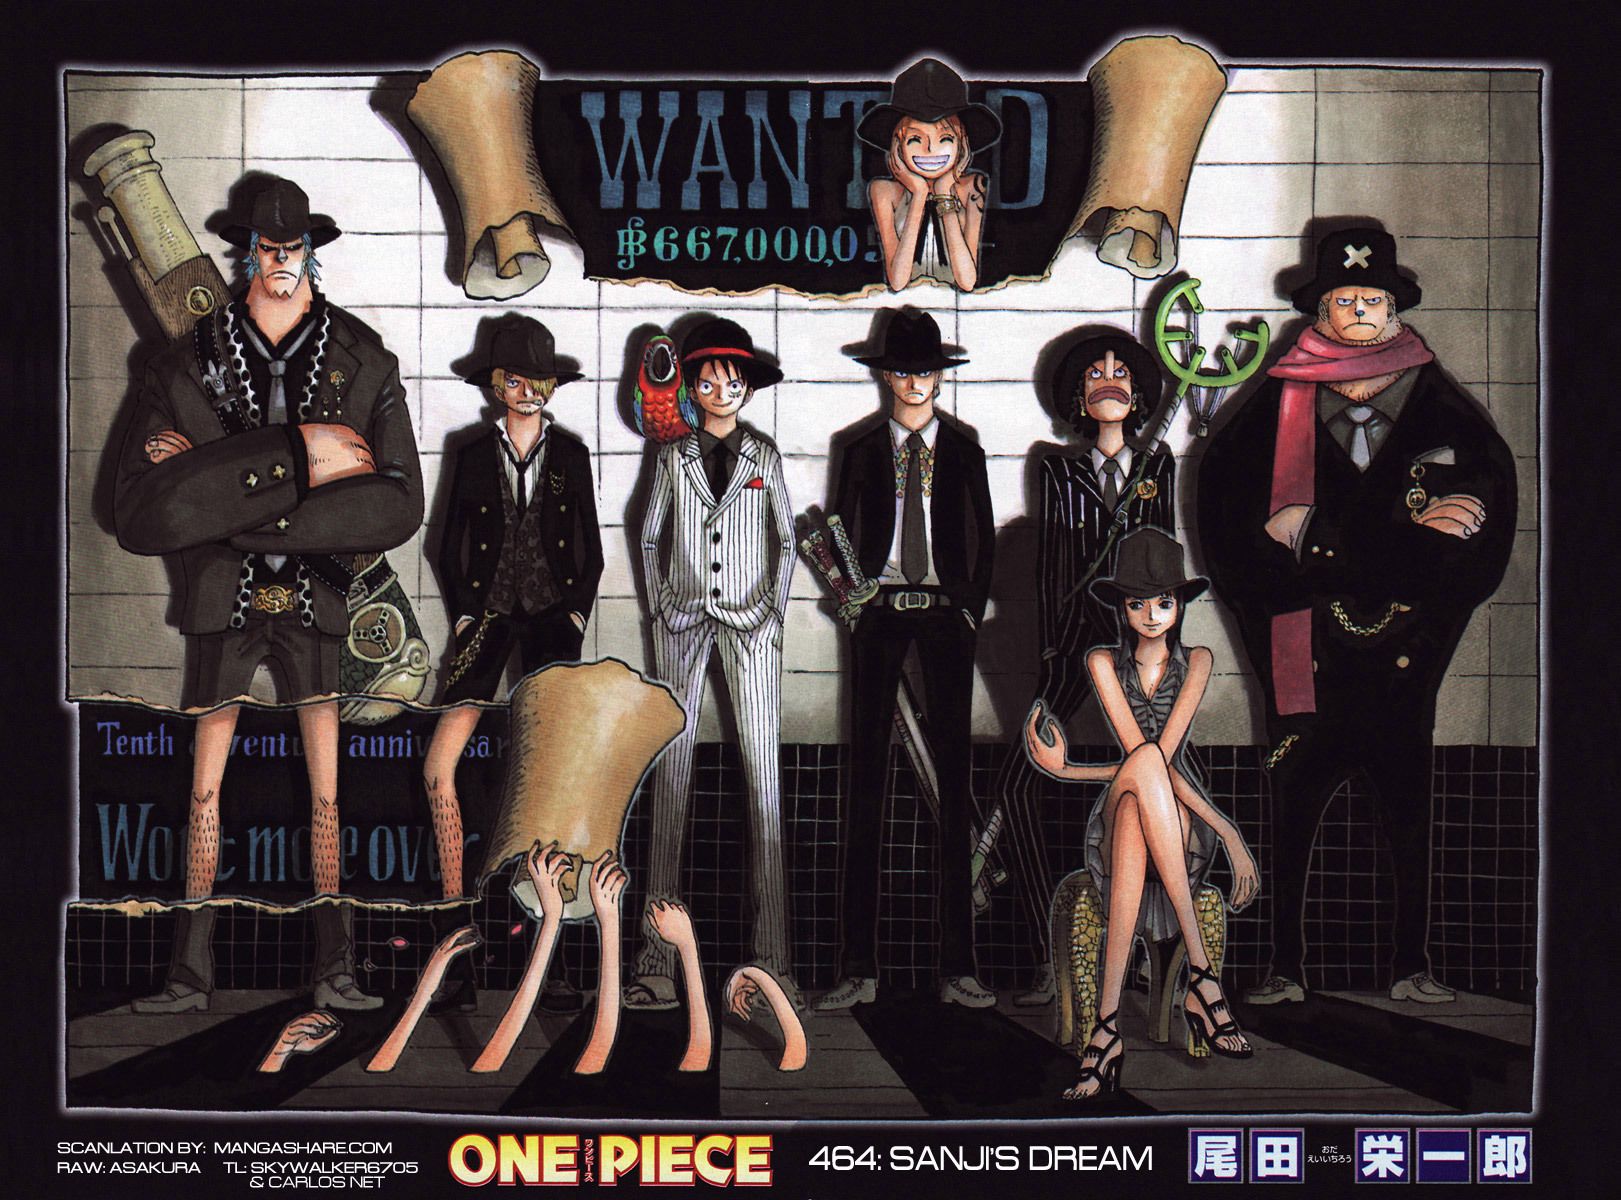 One Piece image Straw Hat Crew Bounty wallpaper photo 9751095